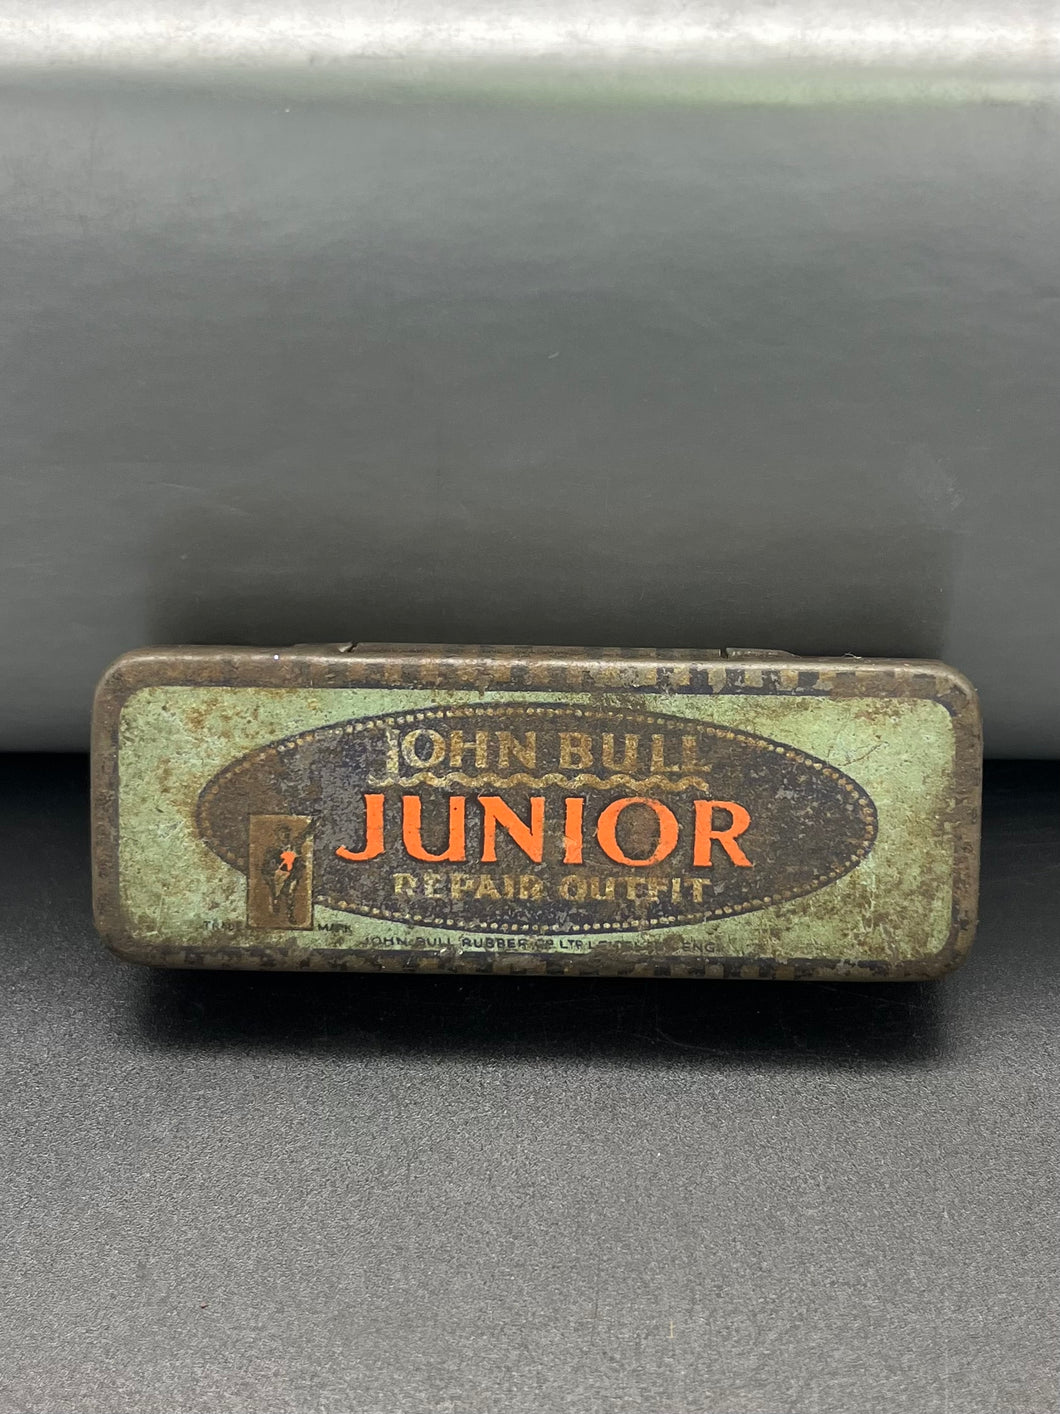 John Bull Junior Repair Outfit Tin